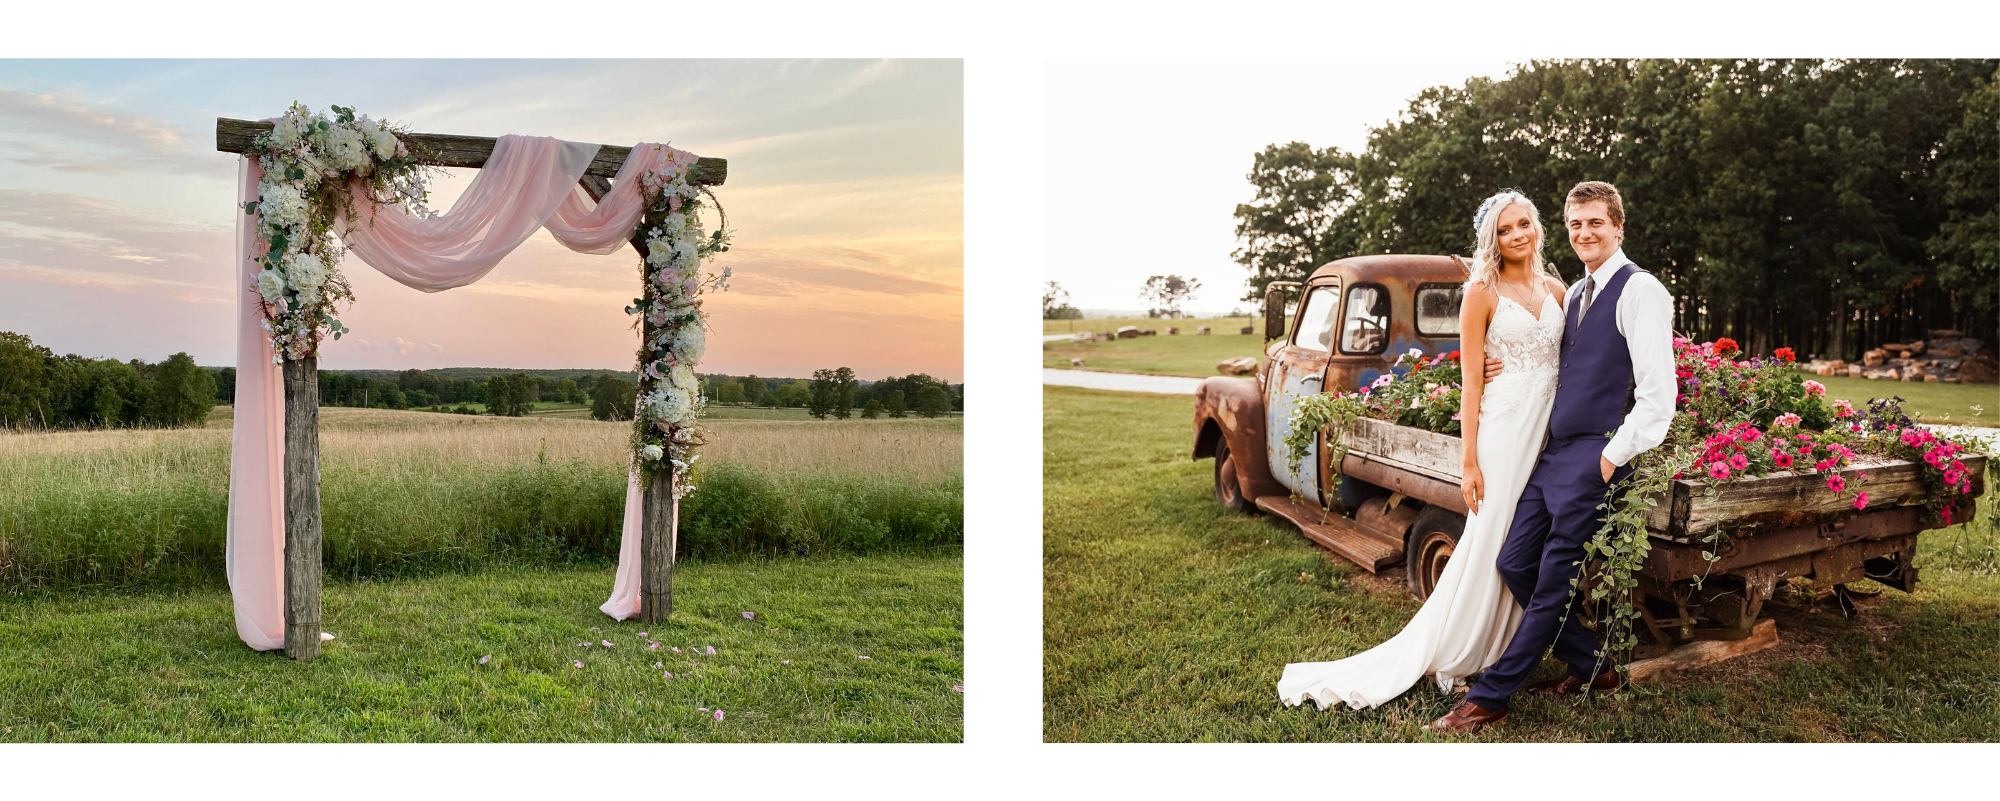 Outdoor rustic wedding collage